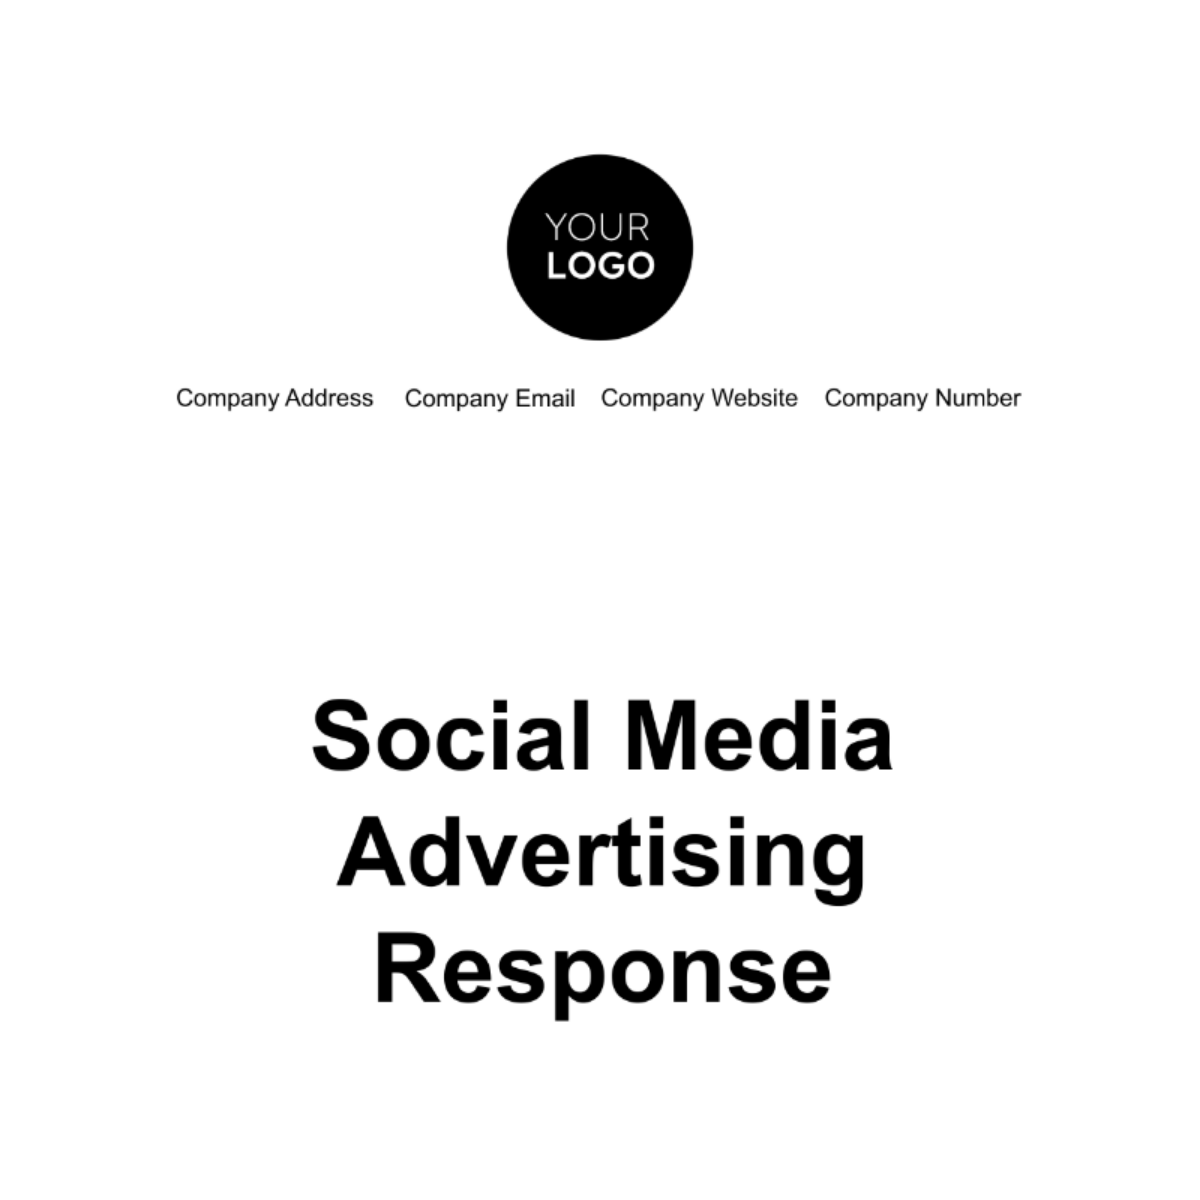 Free Social Media Advertising Response Template